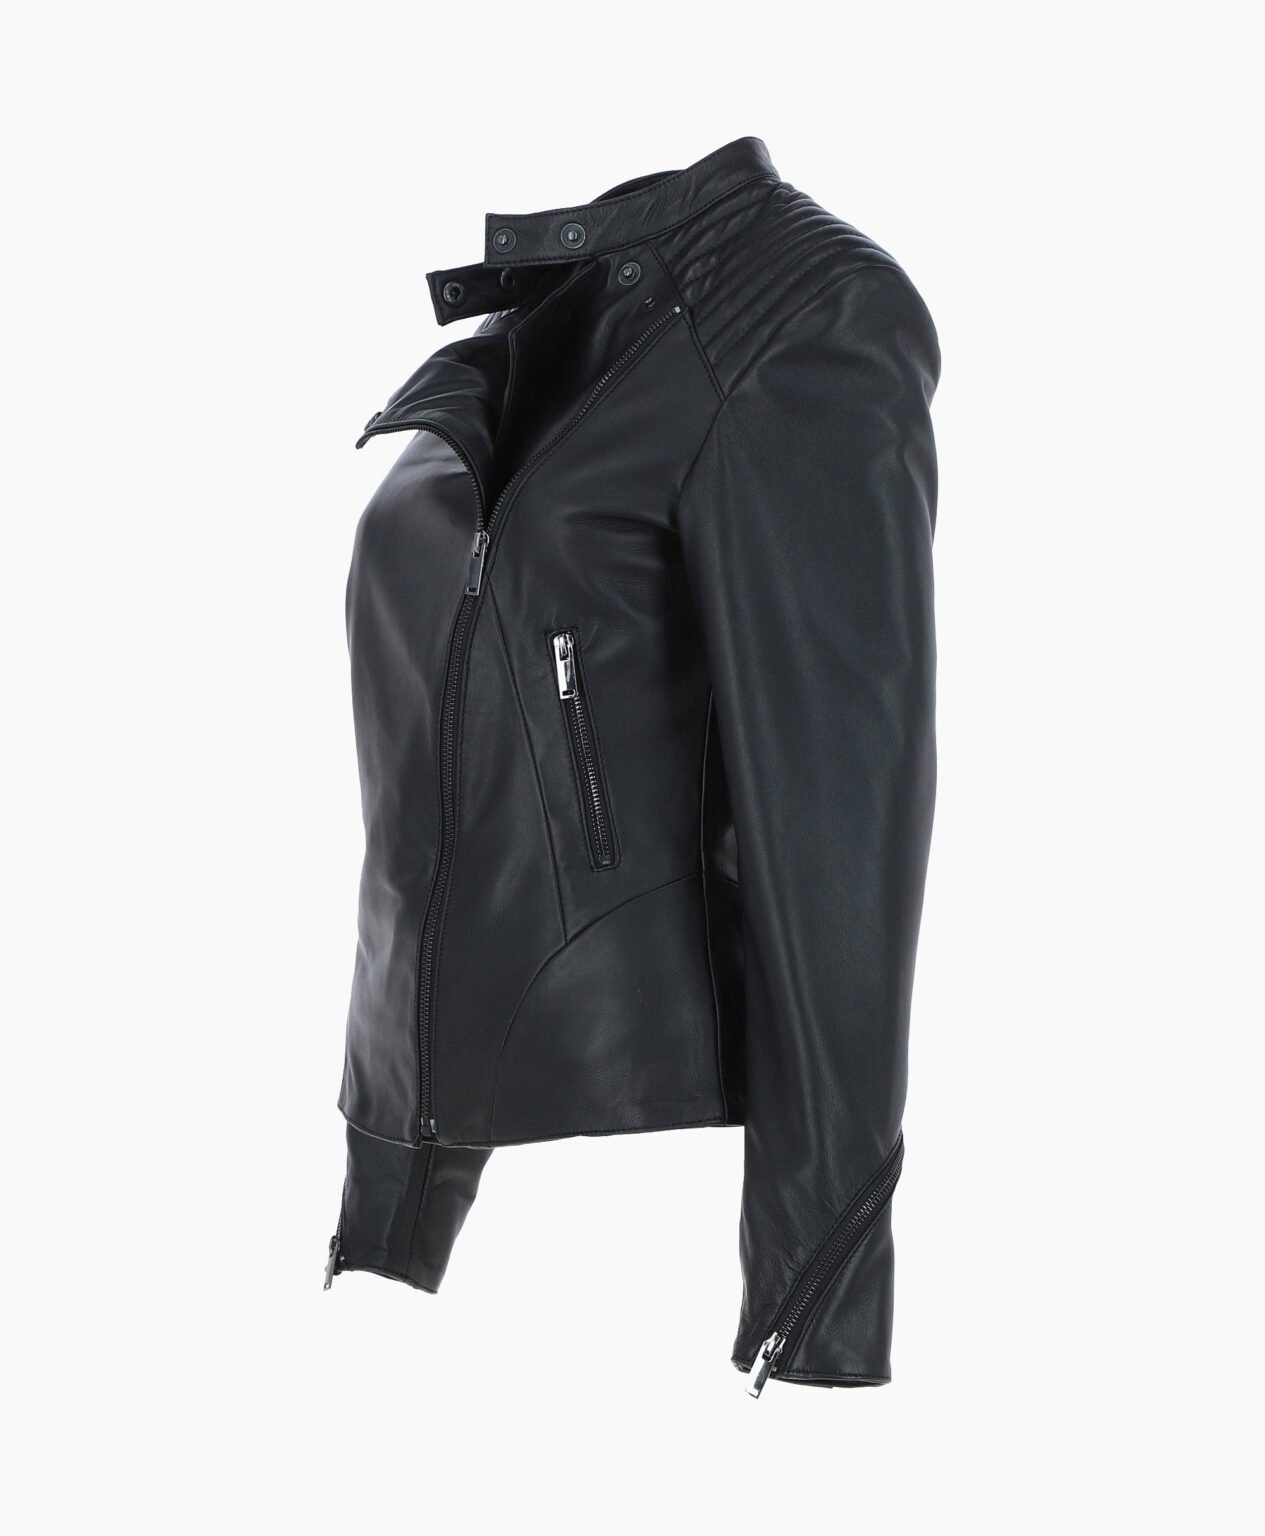 vogue-jacket-leather-biker-jacket-black-mundelein-image201